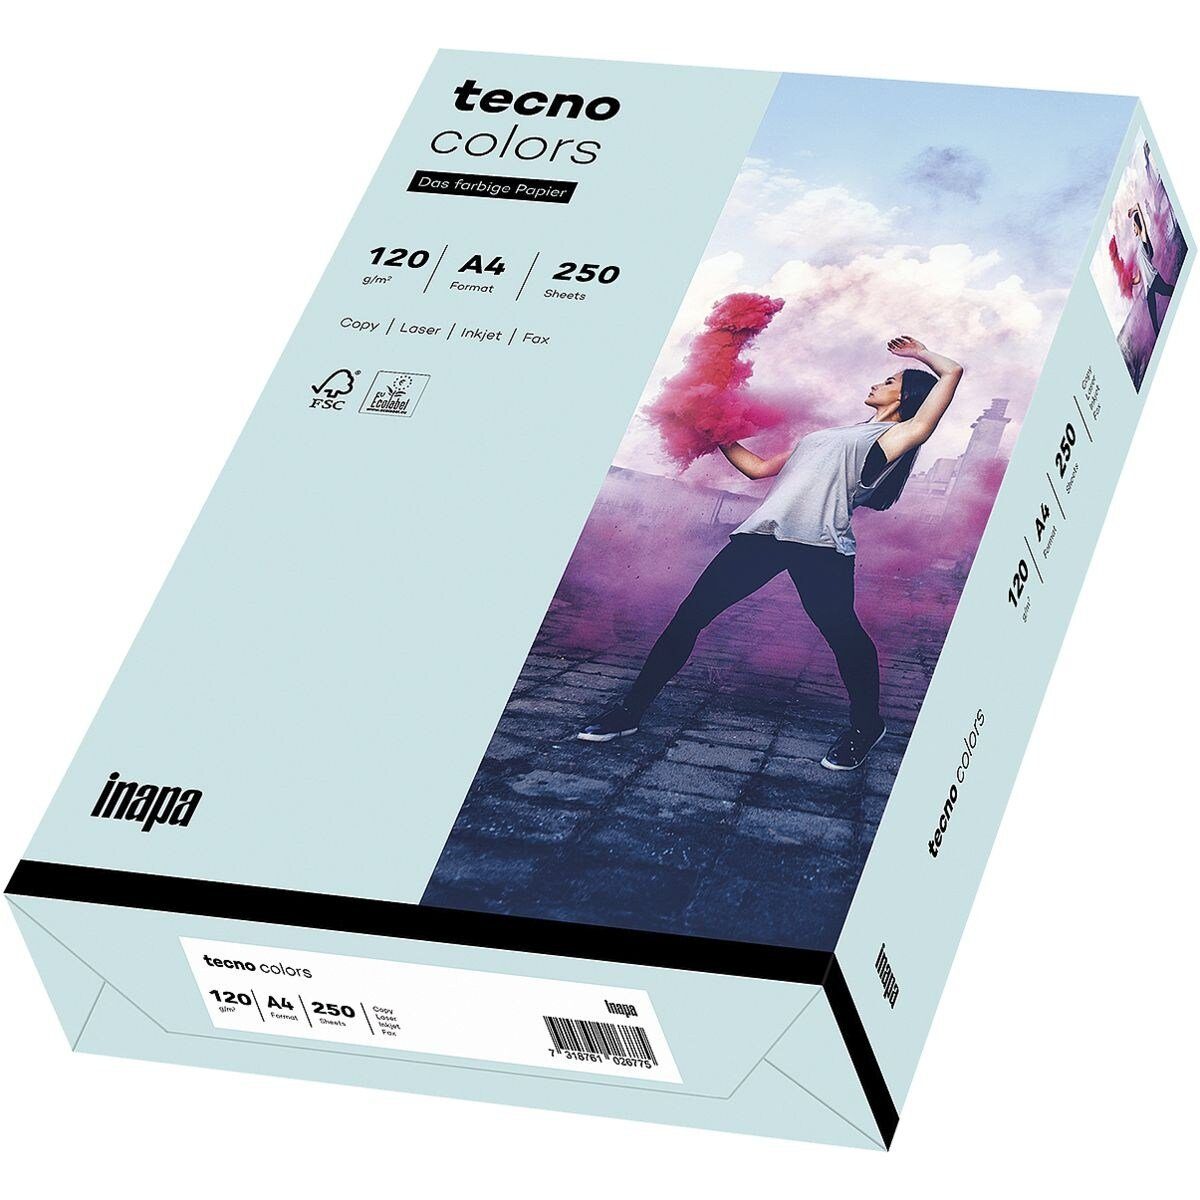 Inapa tecno Drucker- und Kopierpapier Rainbow / tecno Colors, Pastellfarben, Format DIN A4, 120 g/m², 250 Blatt hellblau